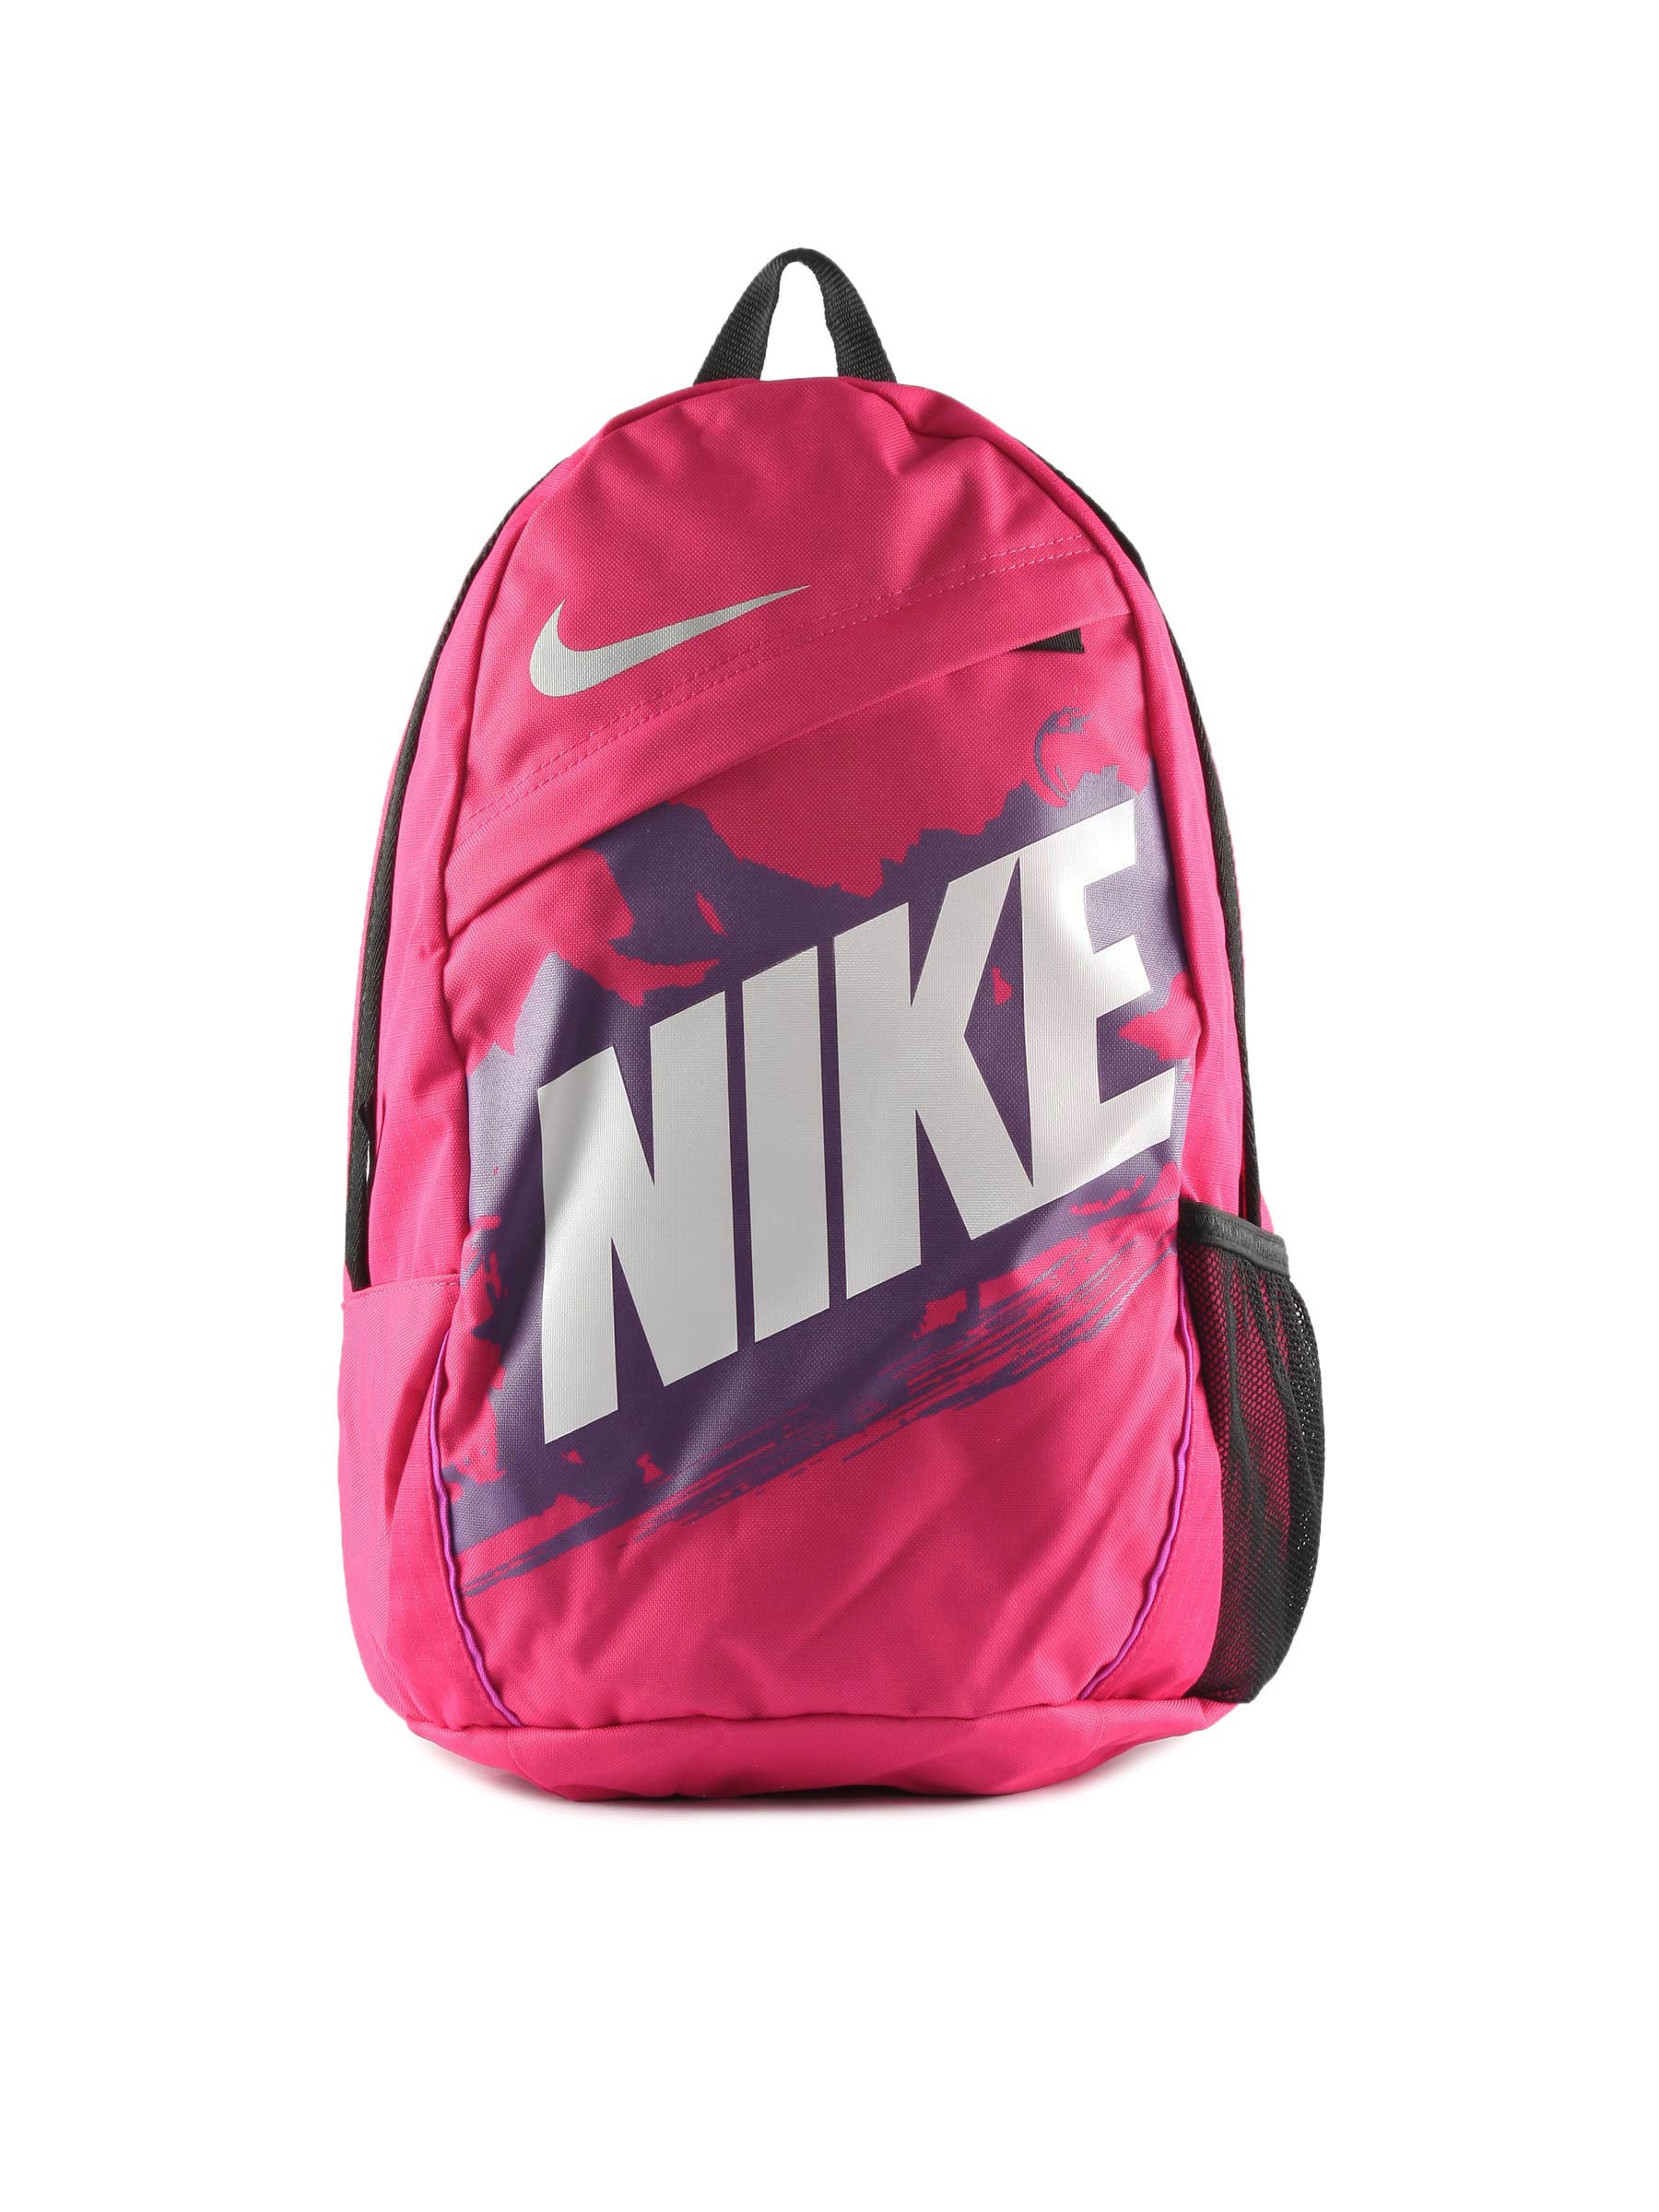 Nike Unisex Classic Turf Pink Backpack